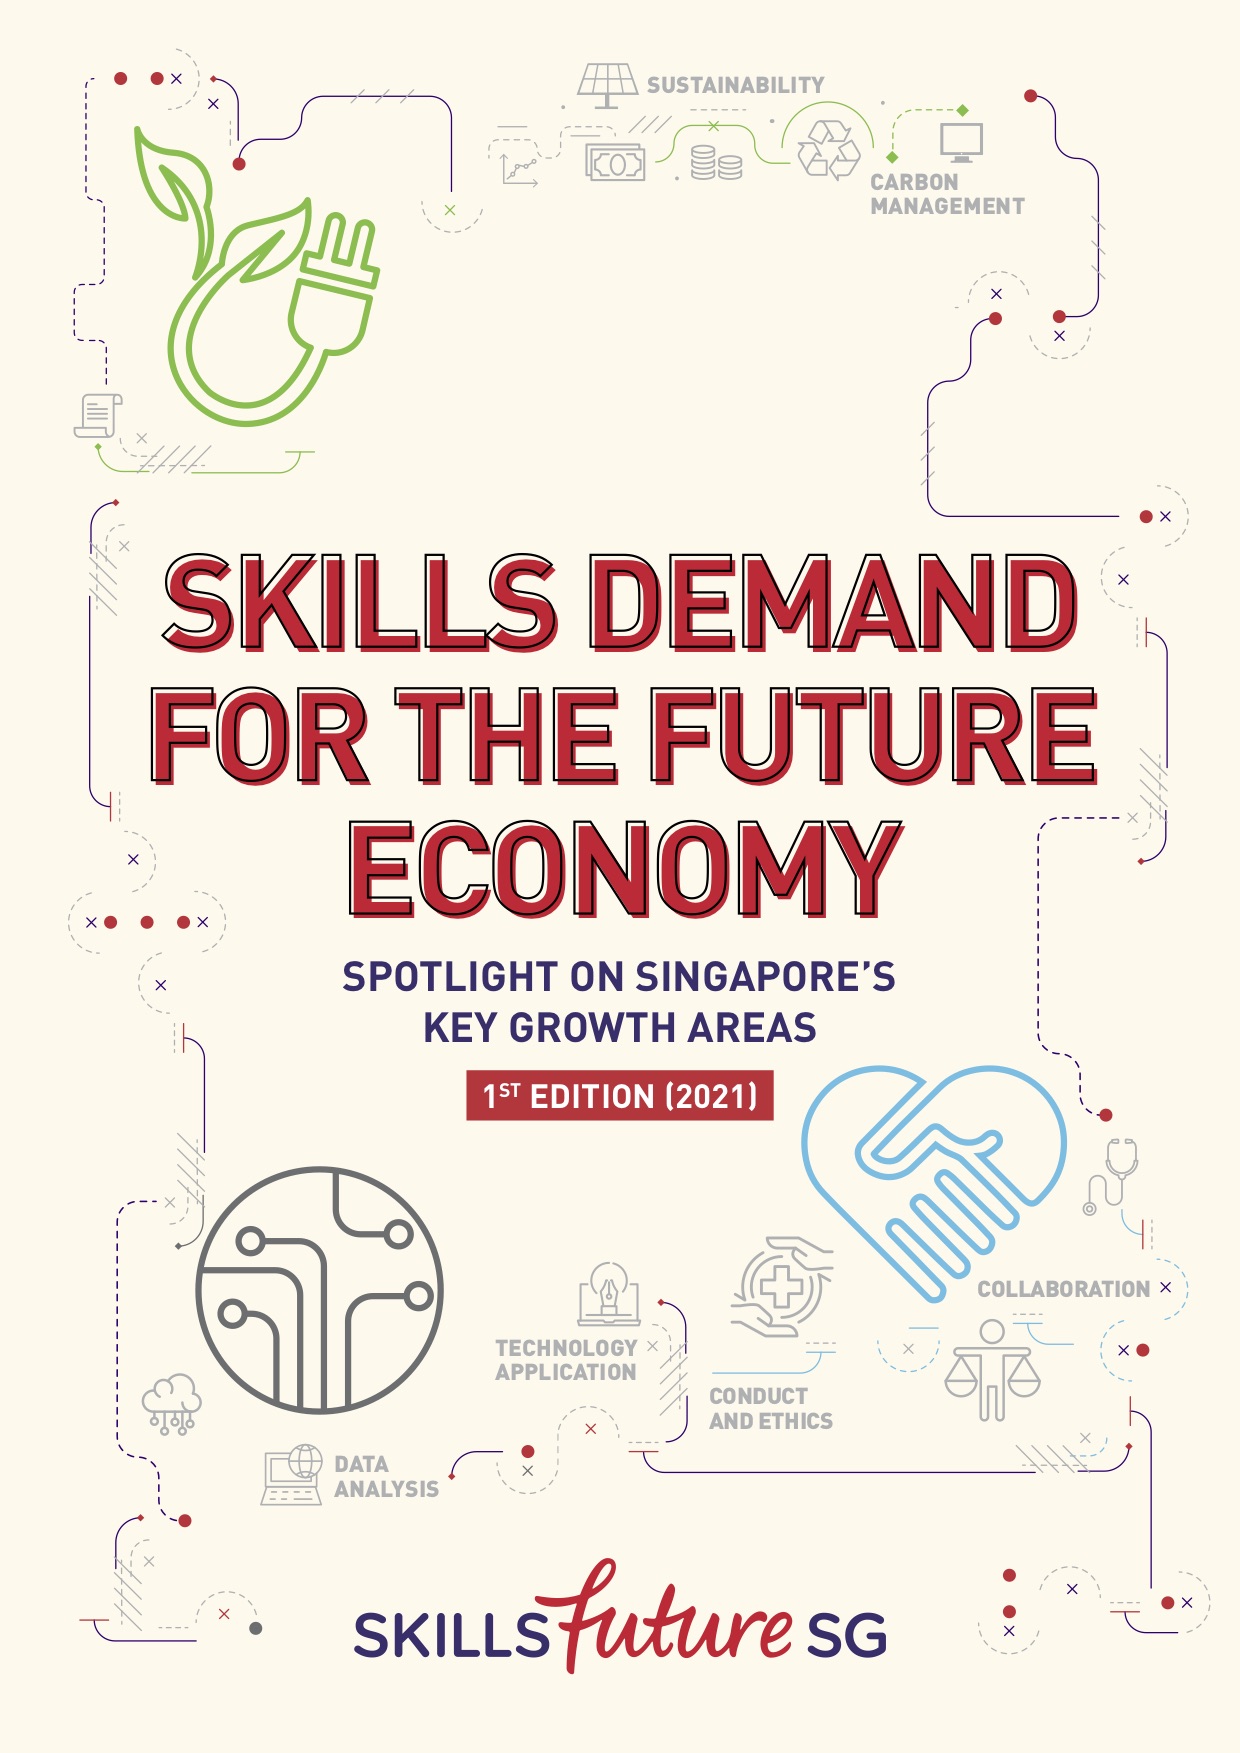 SSG skills demand for the future economy 2021